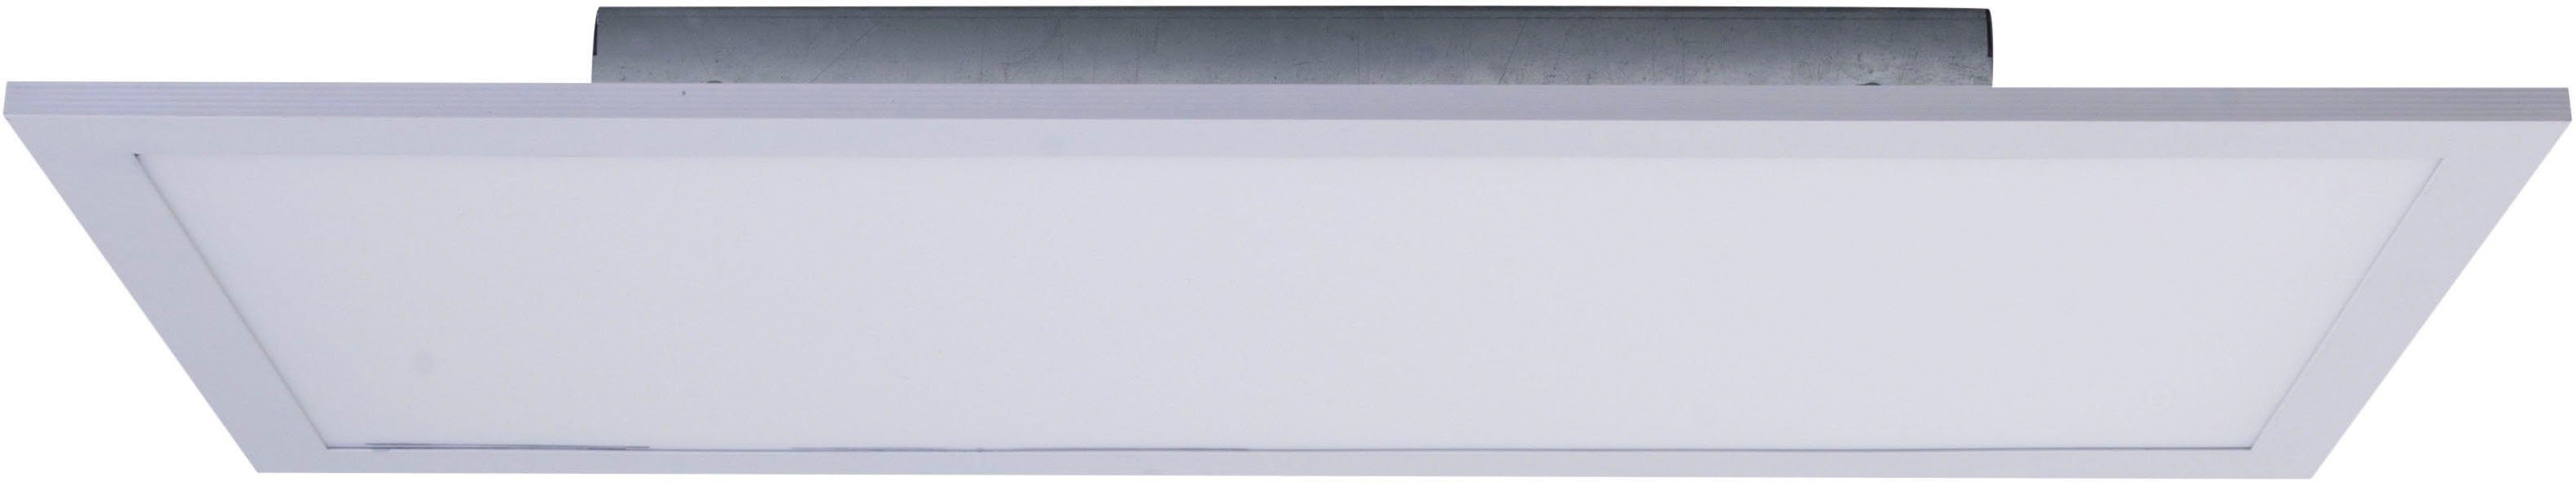 Neutralweiß, inkl. fest integriert, Panel Nicola, Treiber Lichtfarbe LED neutralweiß, weiß, Länge LED näve LED, 59,5cm,